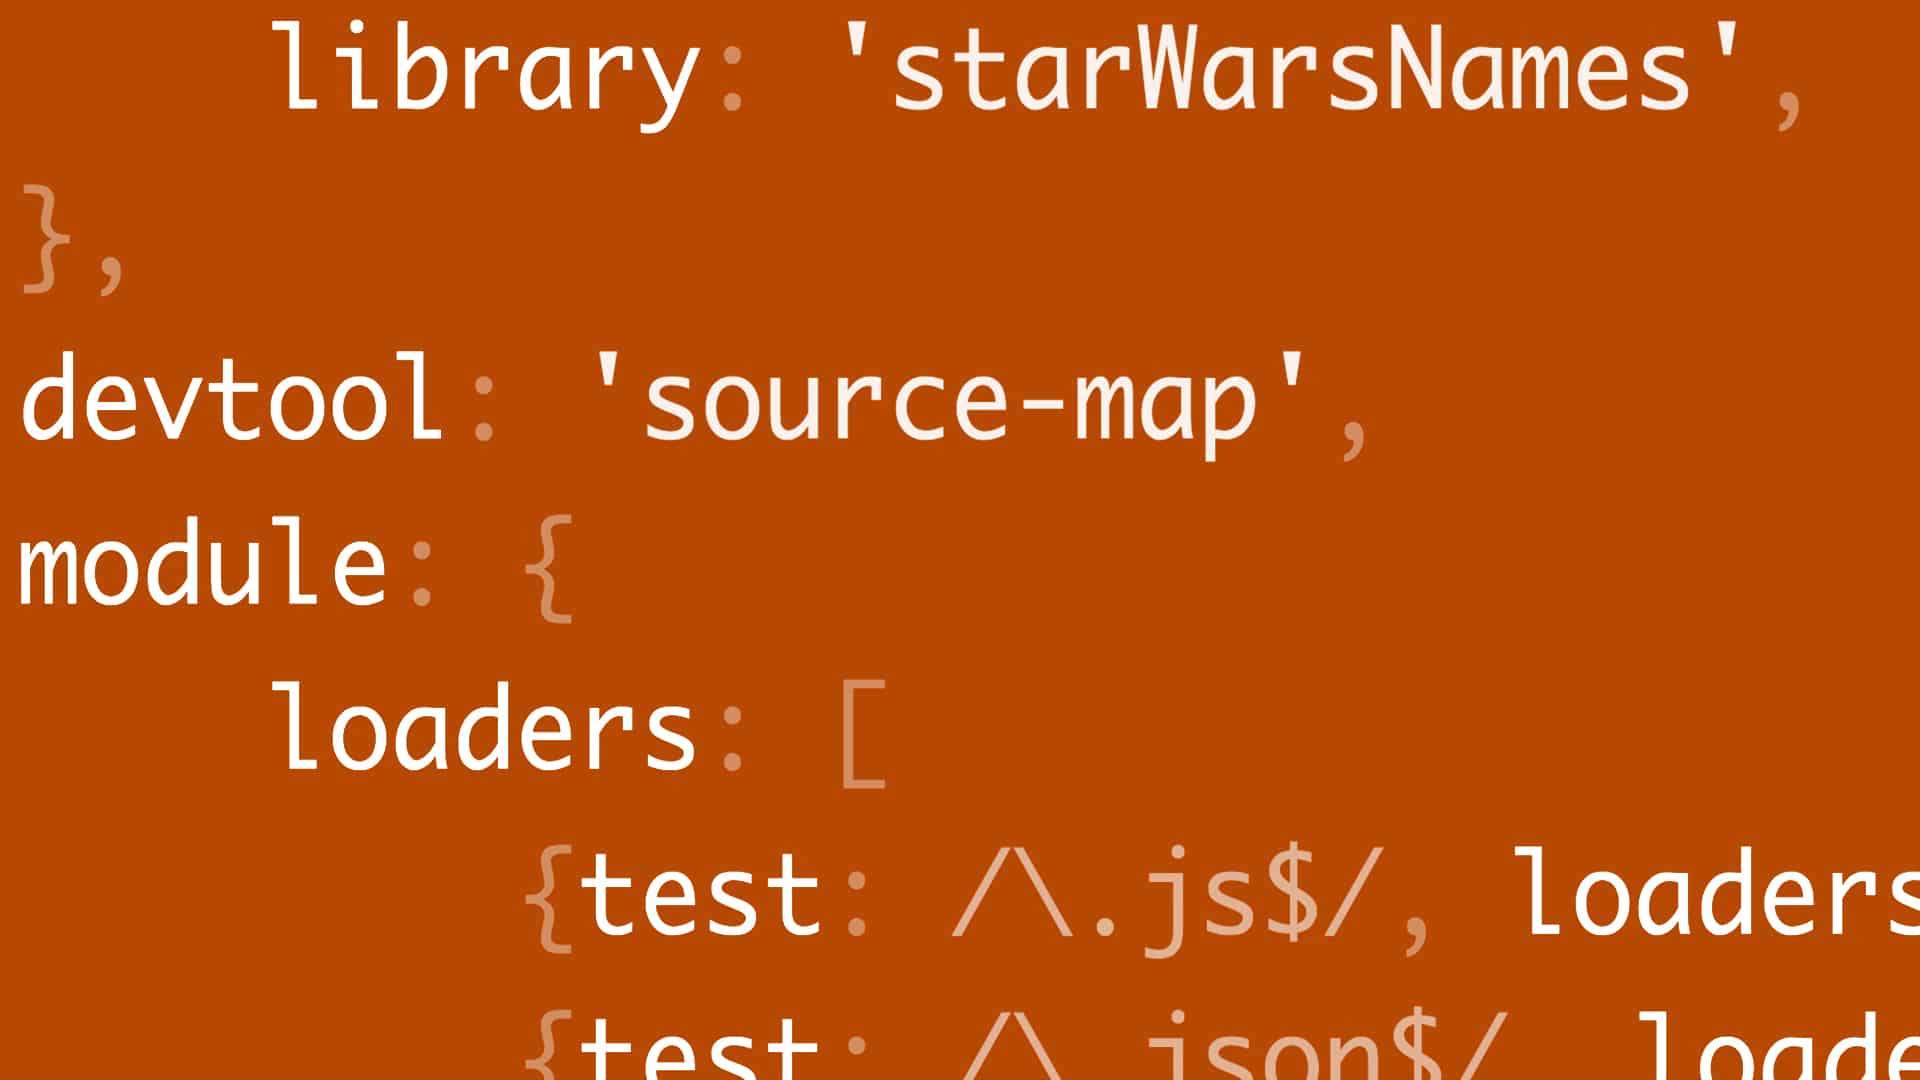 [Lynda] Creating an Open Source JavaScript Library